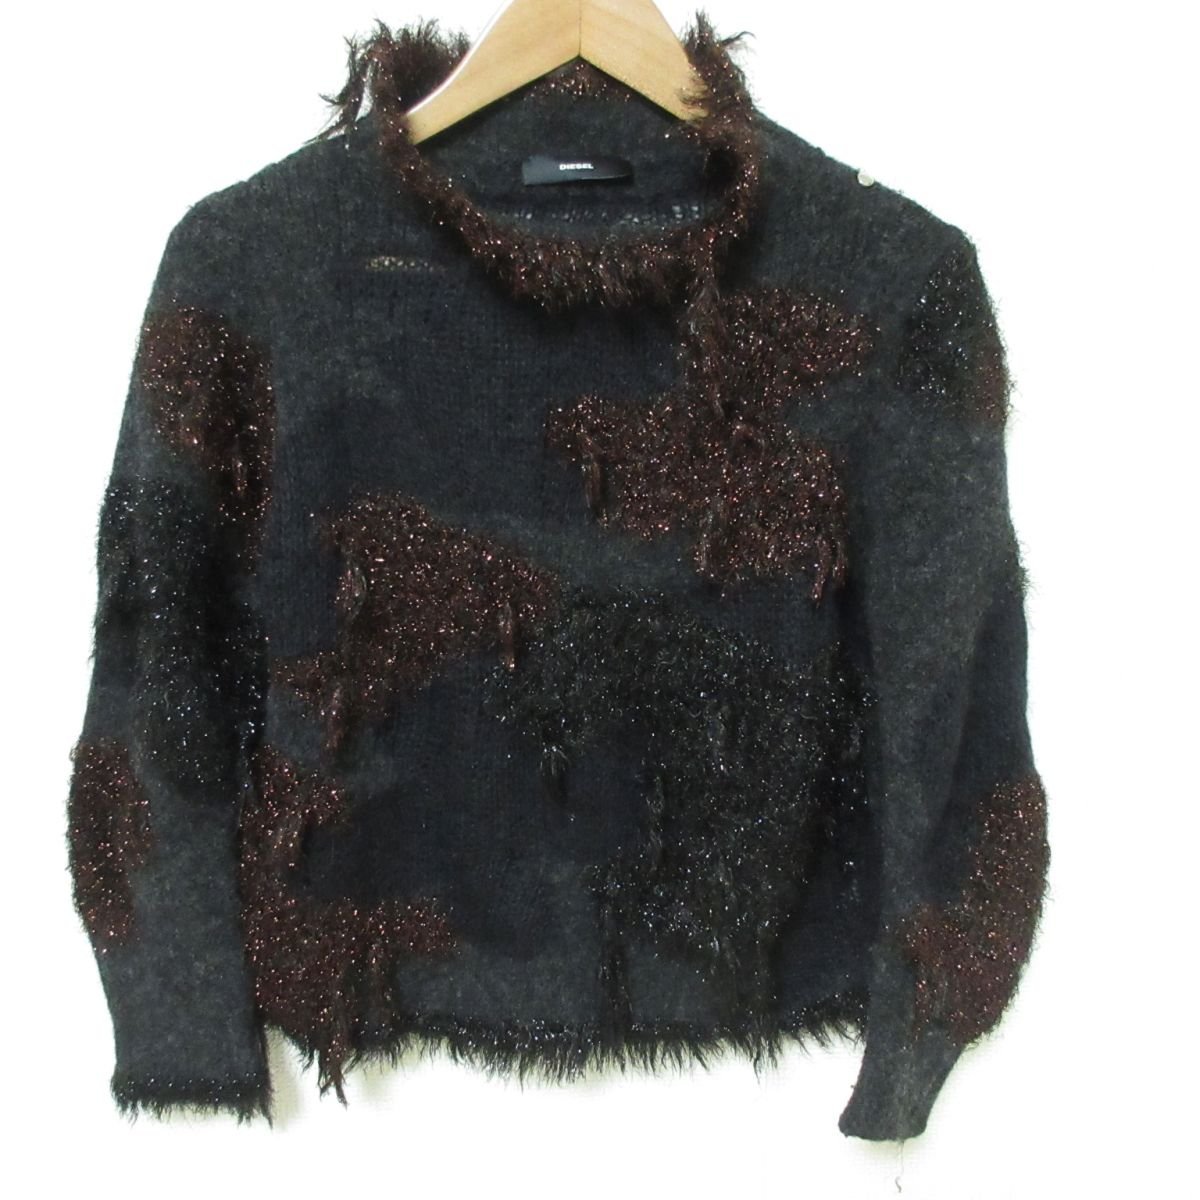  beautiful goods DIESEL diesel moheya Blend lame long sleeve shaggy knitted sweater size XS black group *